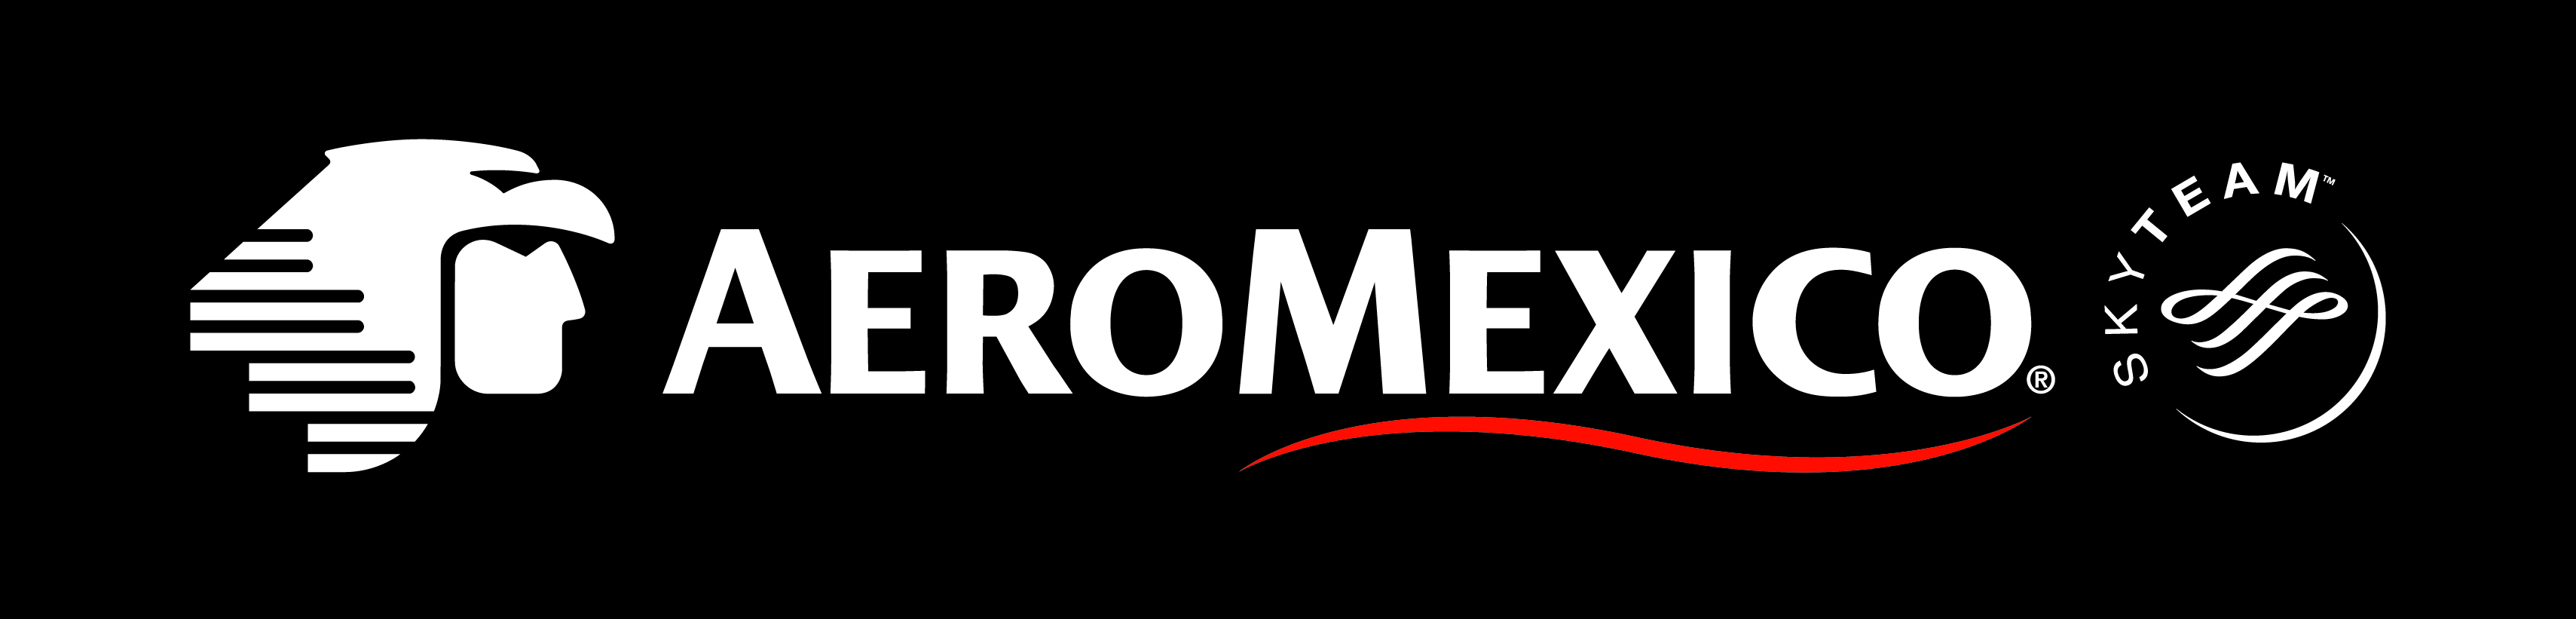 Logo Aeromexico Black PNG - 114673